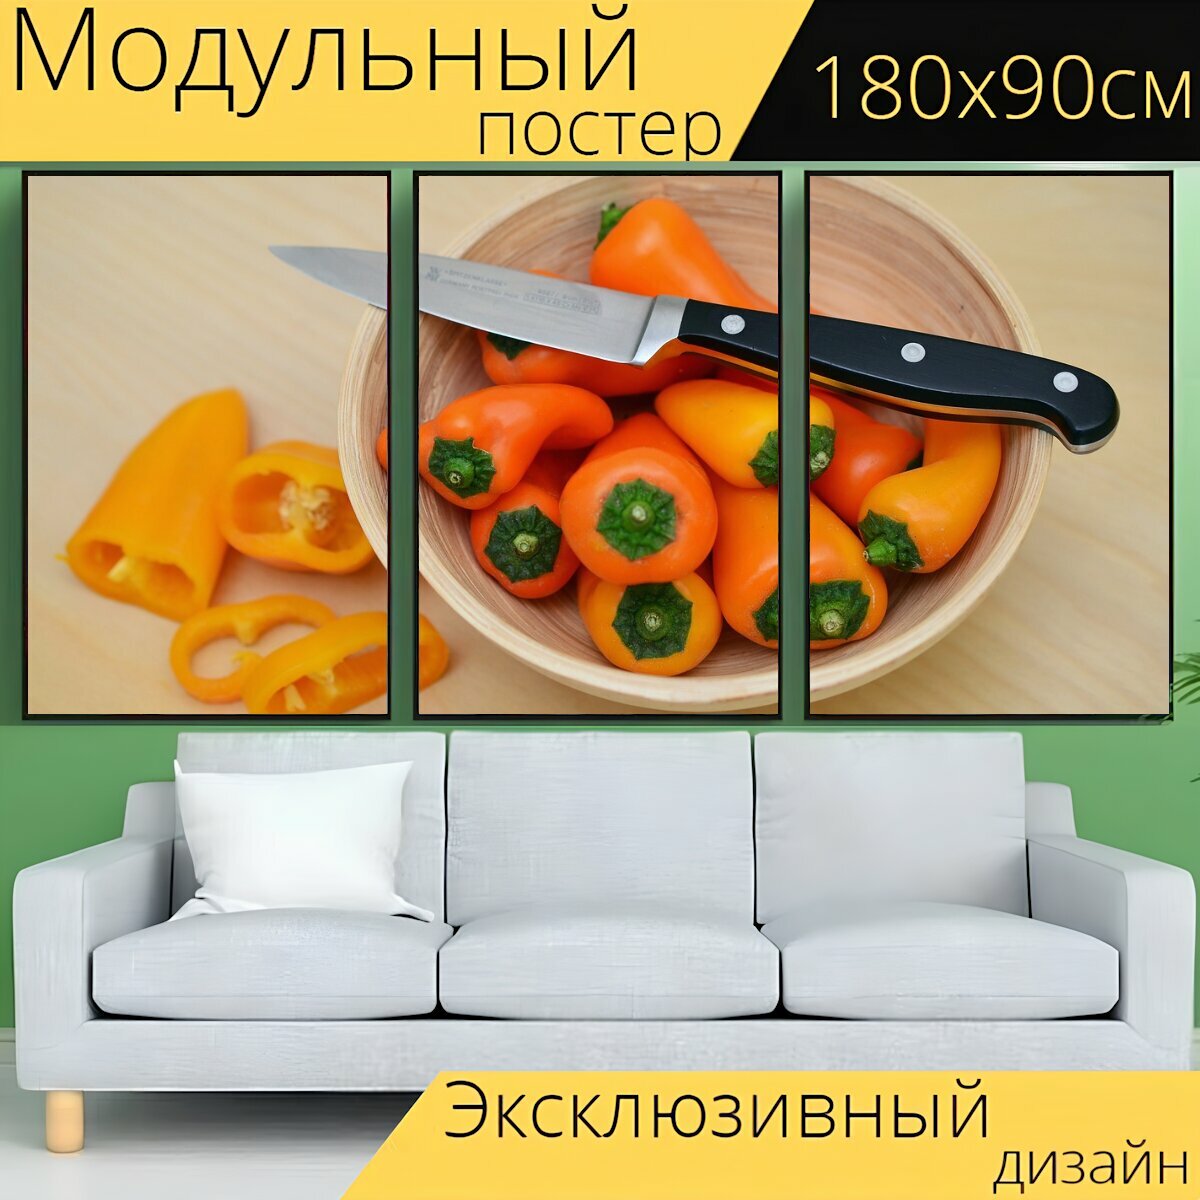 Модульный постер "Перец, овощи, закуски овощи" 180 x 90 см. для интерьера